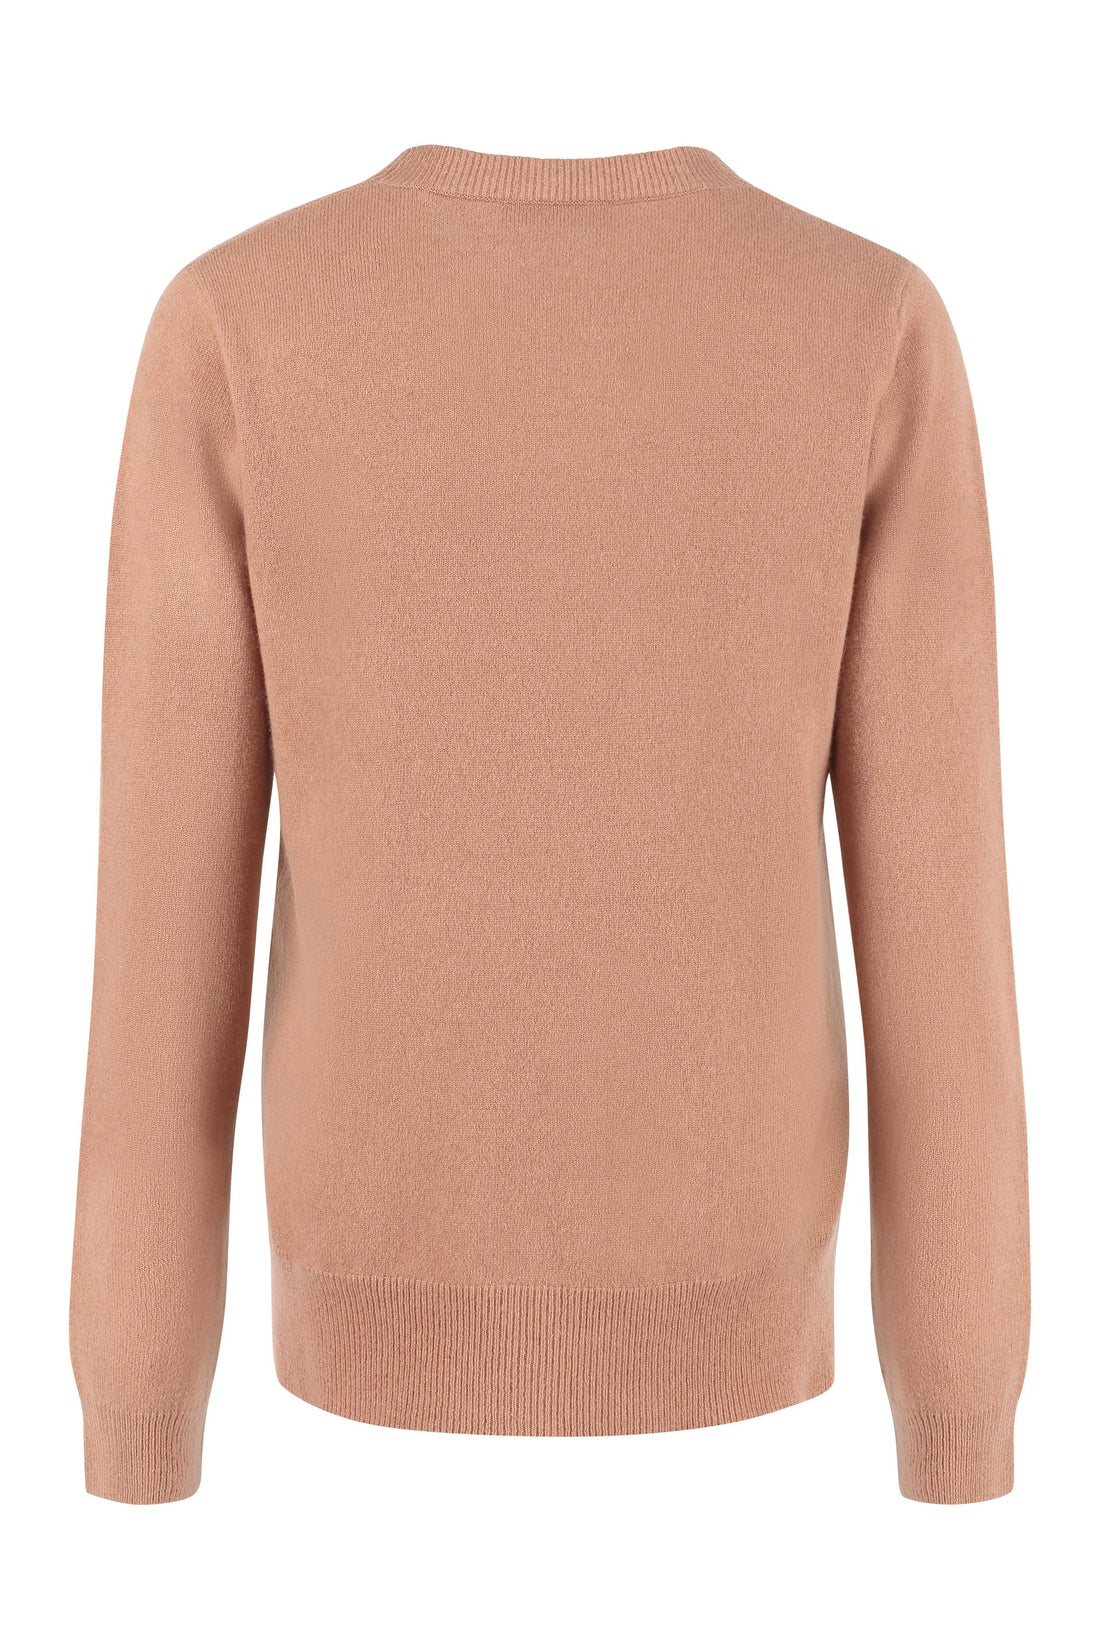 Max Mara-OUTLET-SALE-Bimba crew-neck cashmere sweater-ARCHIVIST